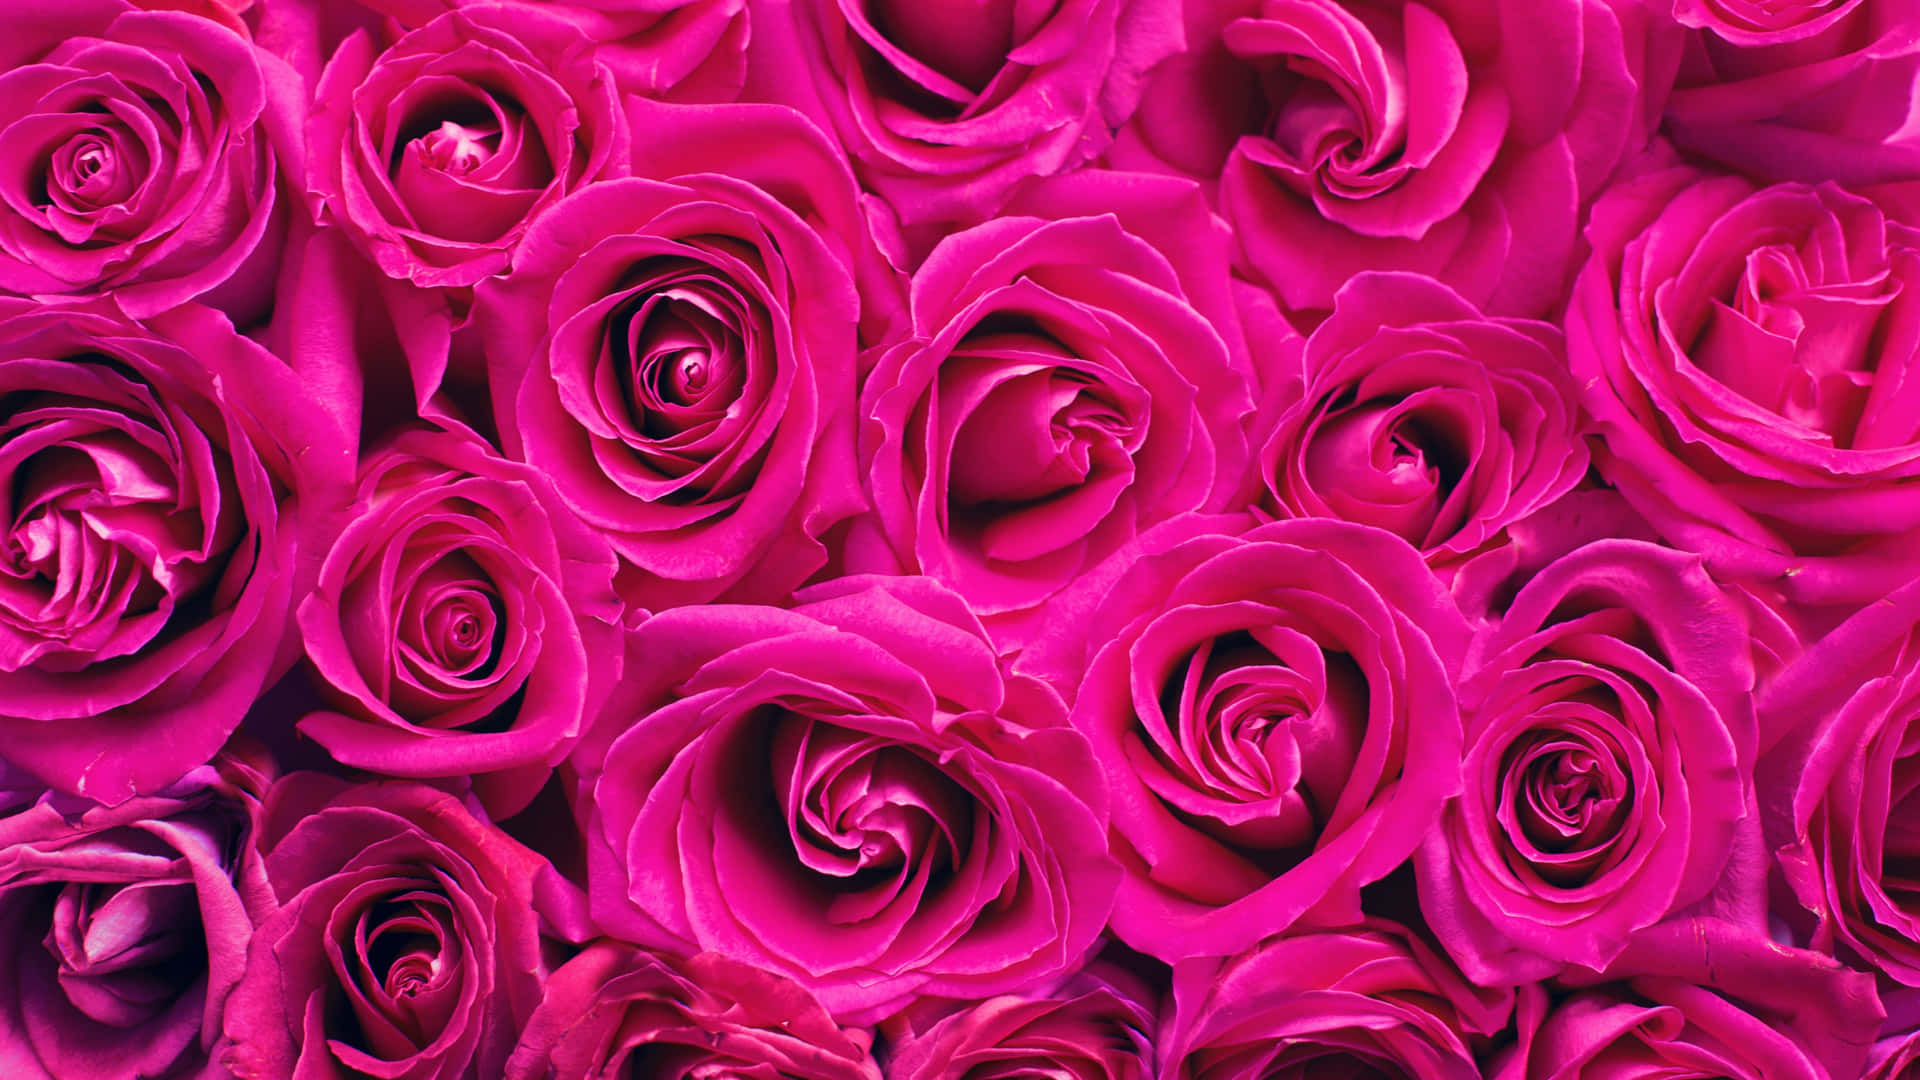 1440p Fuchsia Pink Roses Background